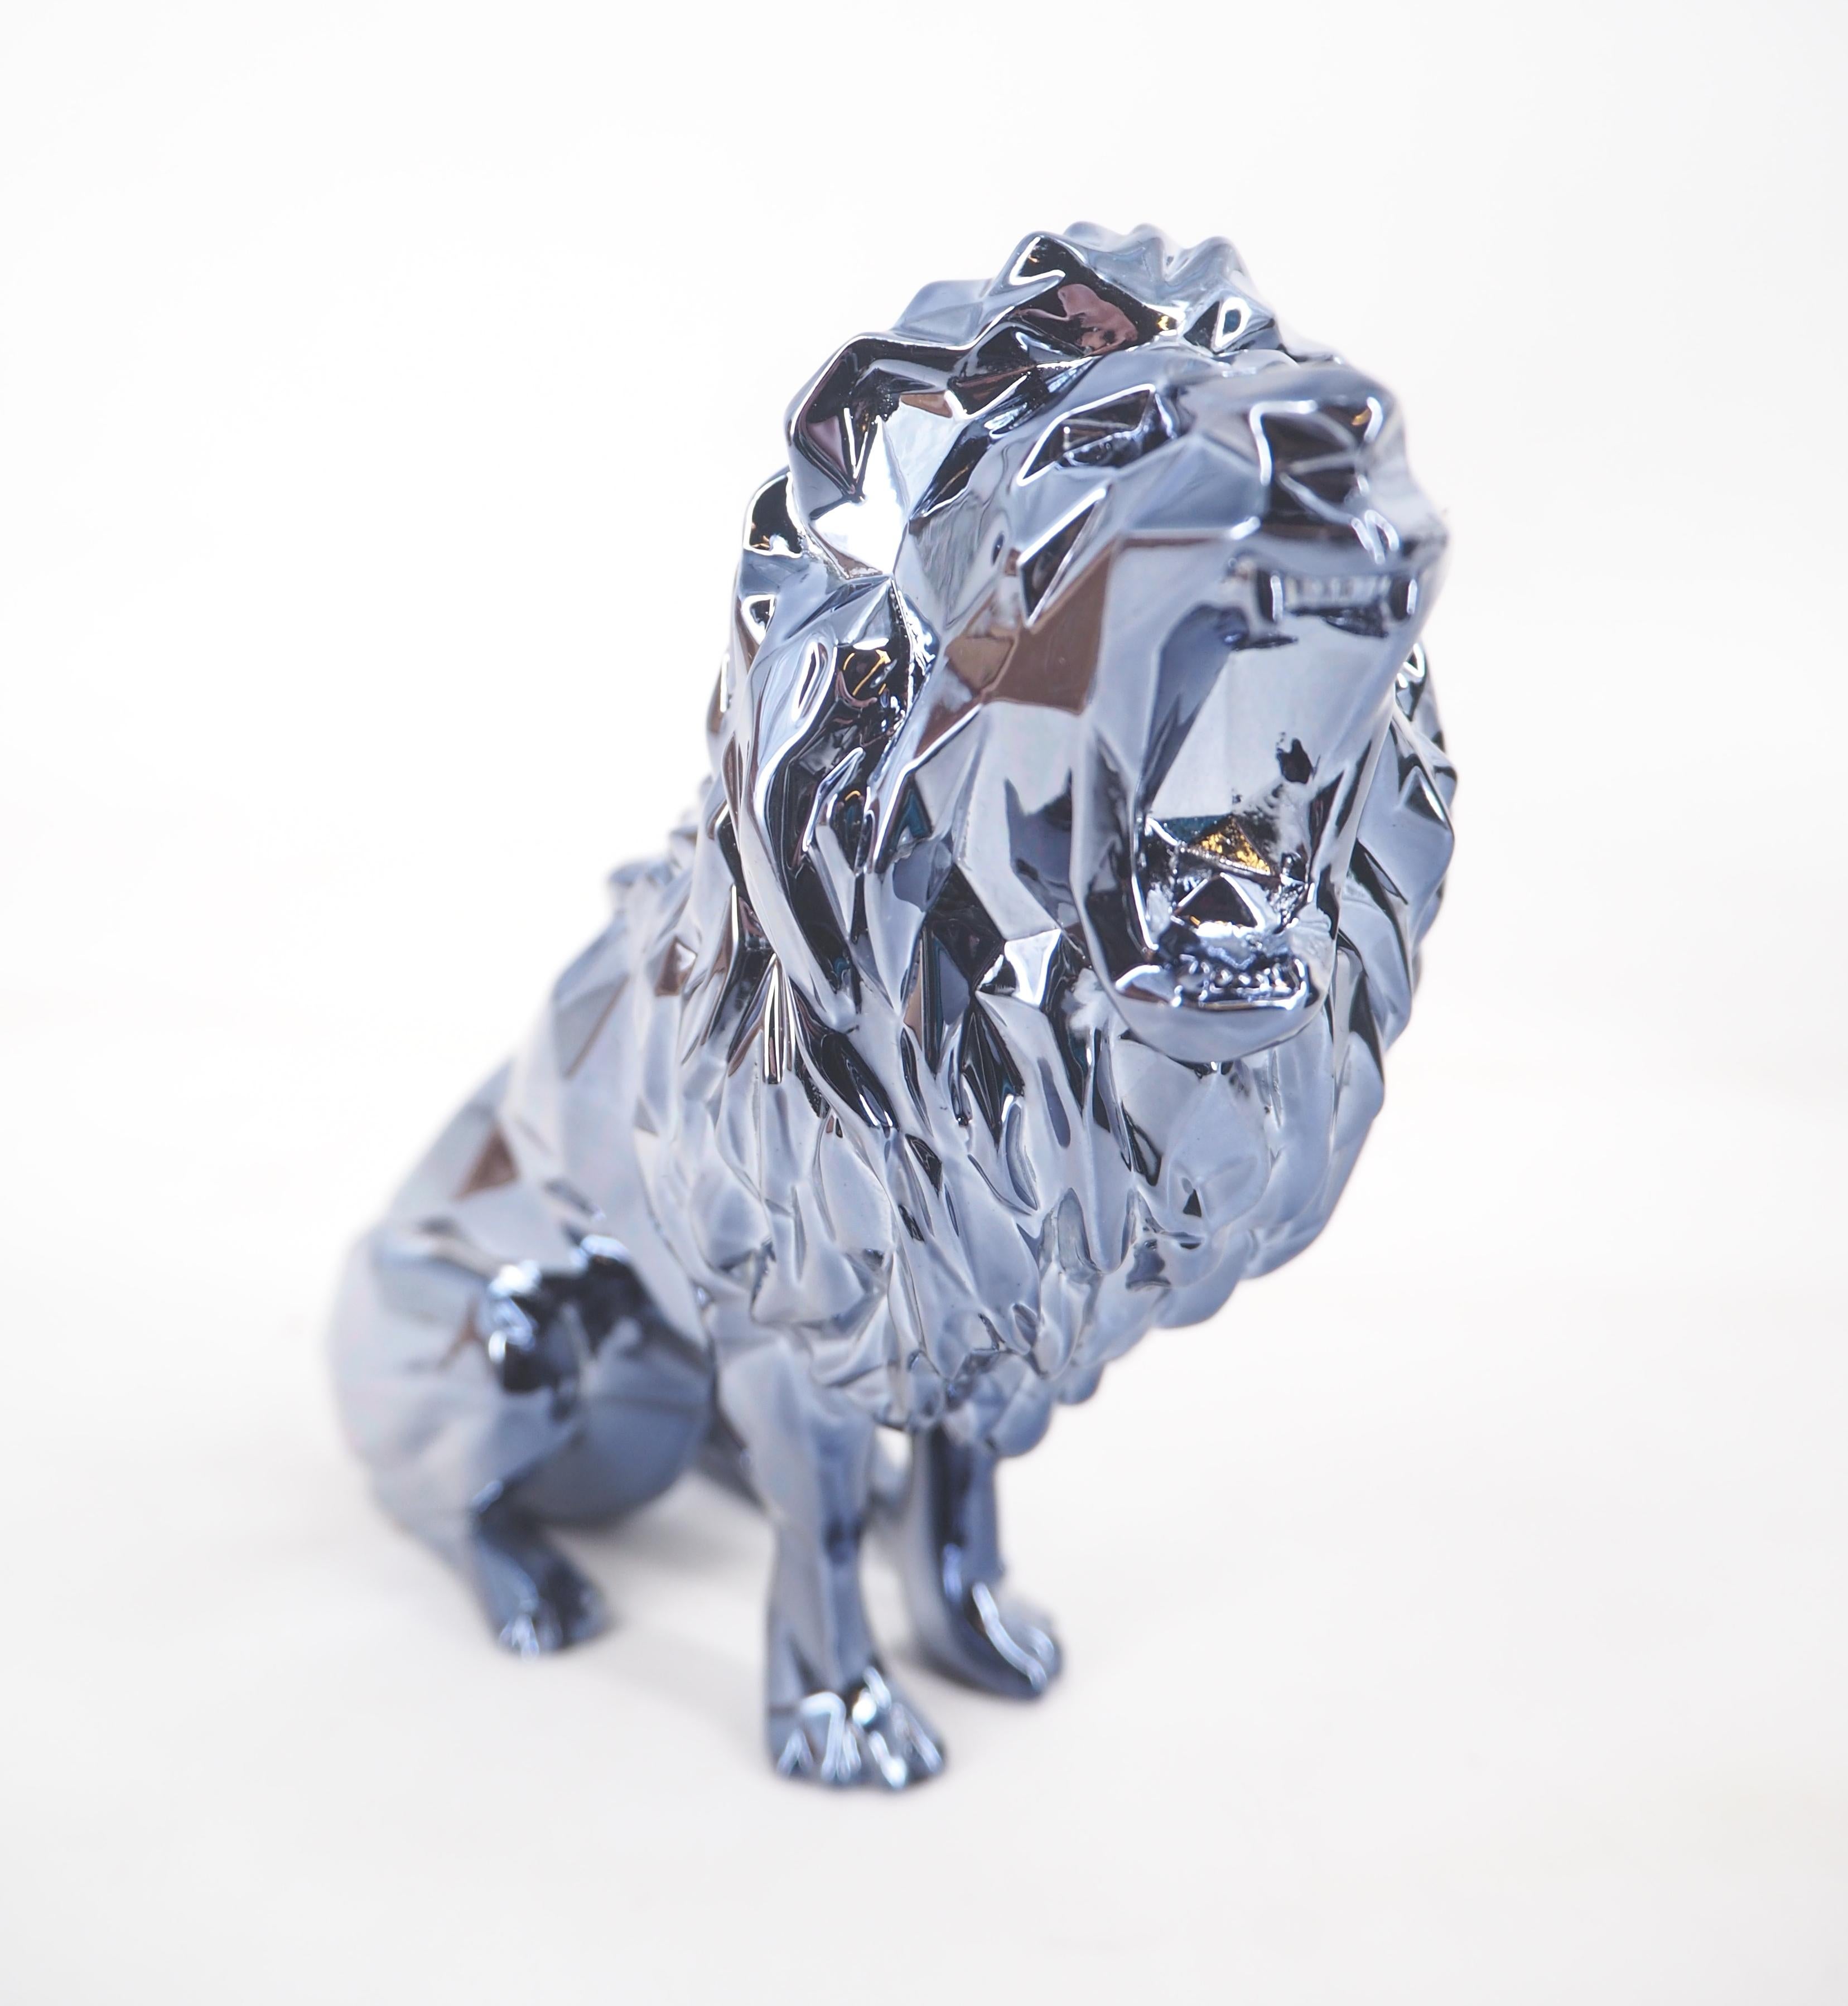 Roaring Lion Spirit (Petrol edition) - Sculpture in original box with artist coa